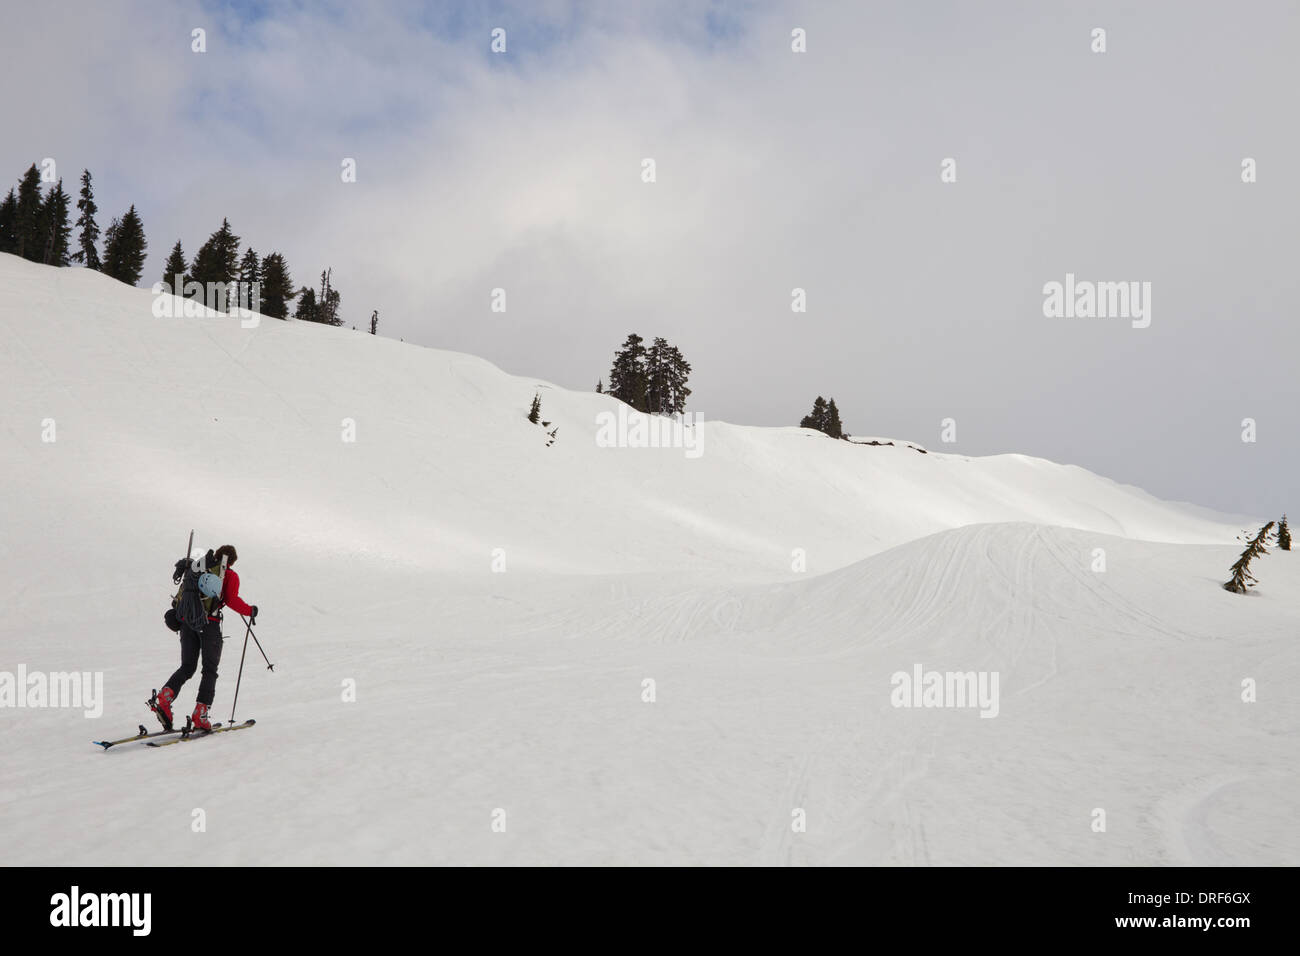 Mount Baker Washington state USA skier skins up snow slope towards mountain peak Stock Photo